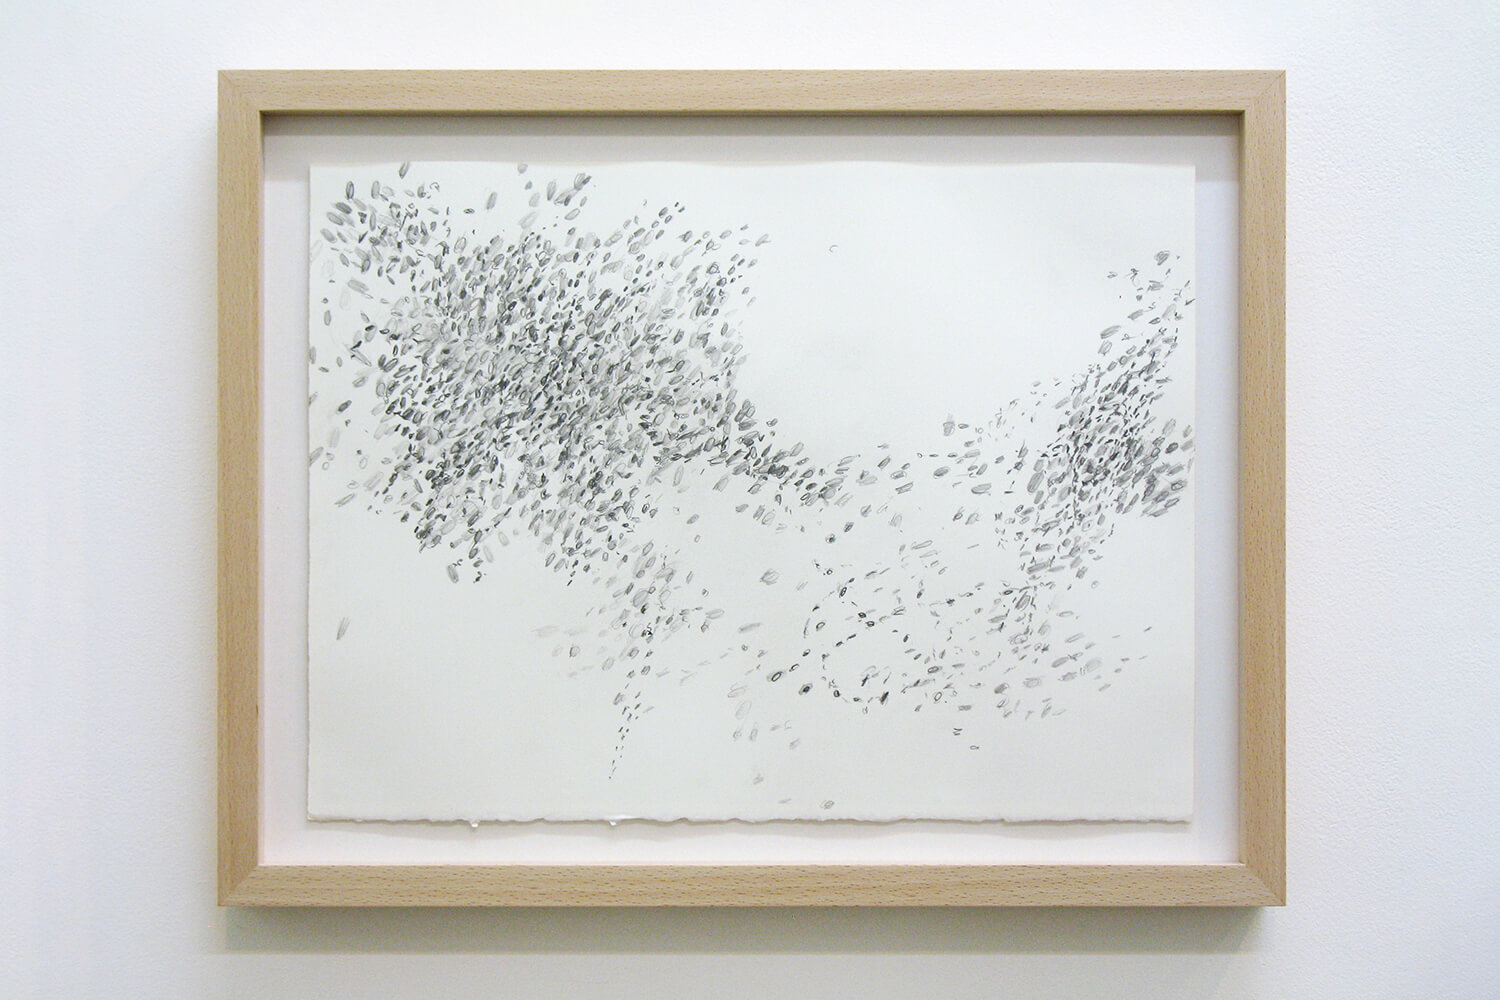 When the Dust Settles (d12)<br>Pencil on paper, 28.5 x 38 cm, 2011